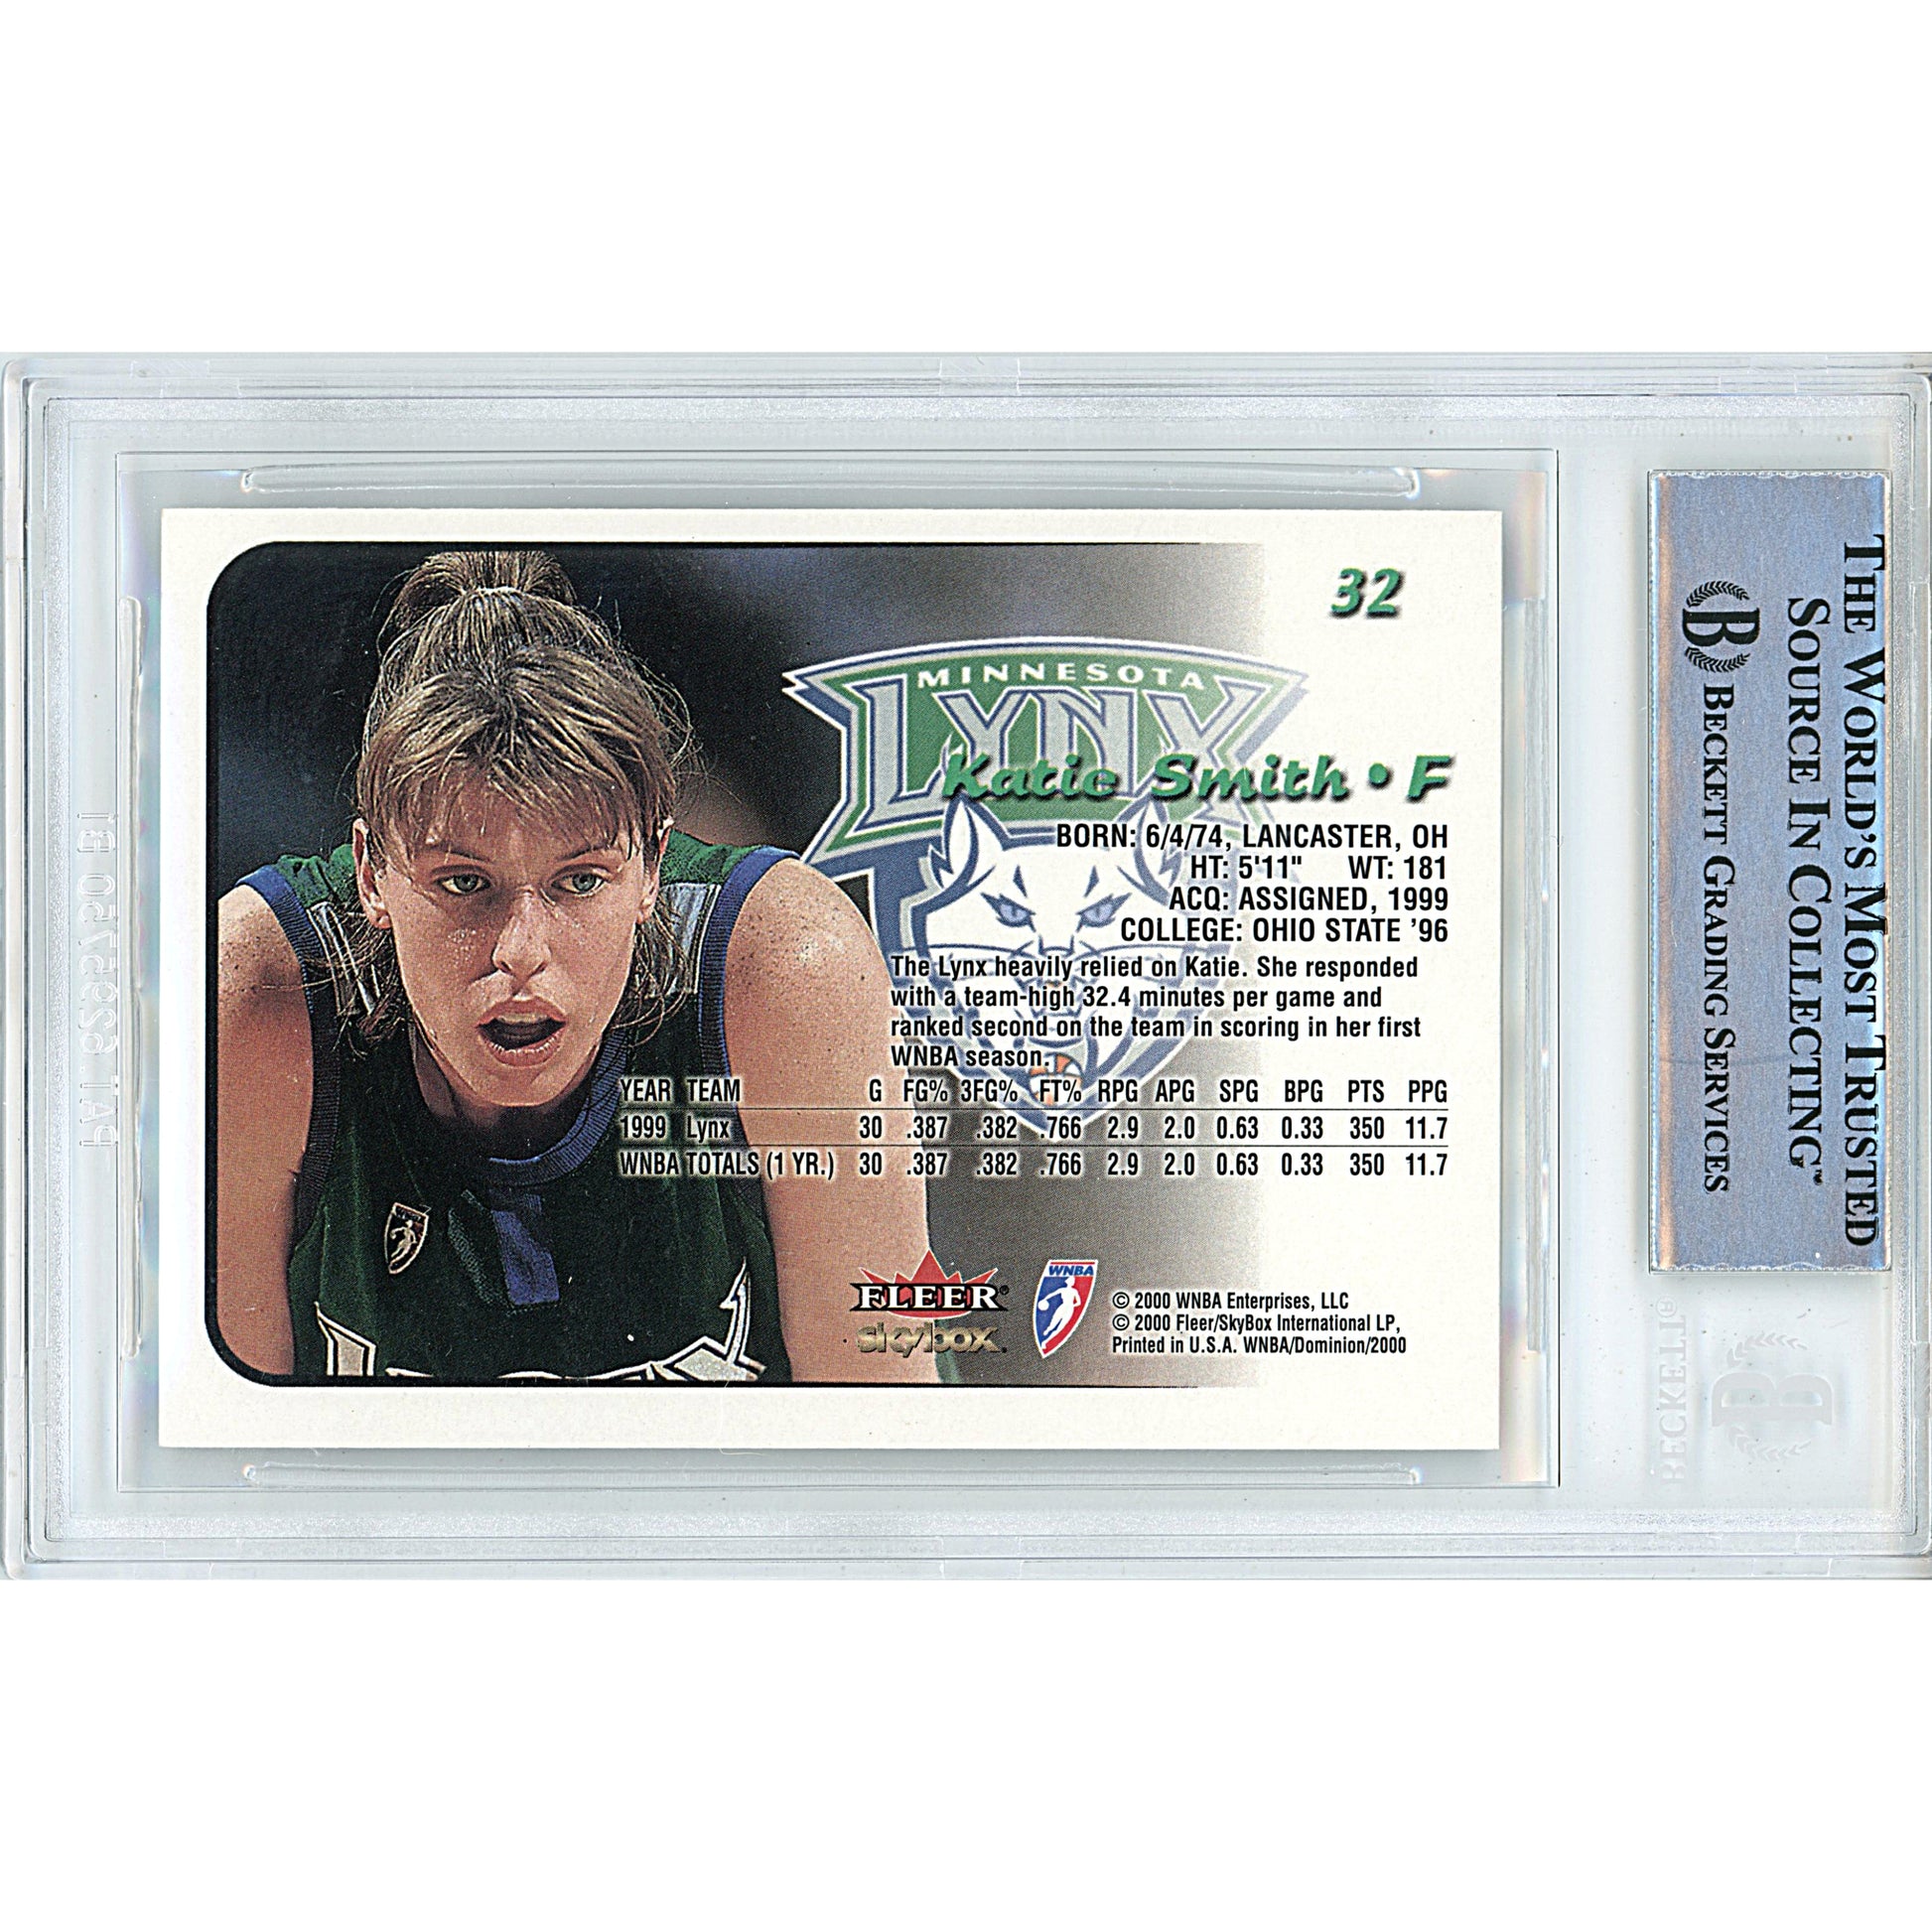 Basketballs- Autographed- Katie Smith Signed Minnesota Lynx 2000 Skybox Dominion WNBA Basketball Card Beckett Authentication Slabbed 00014997844 - 102